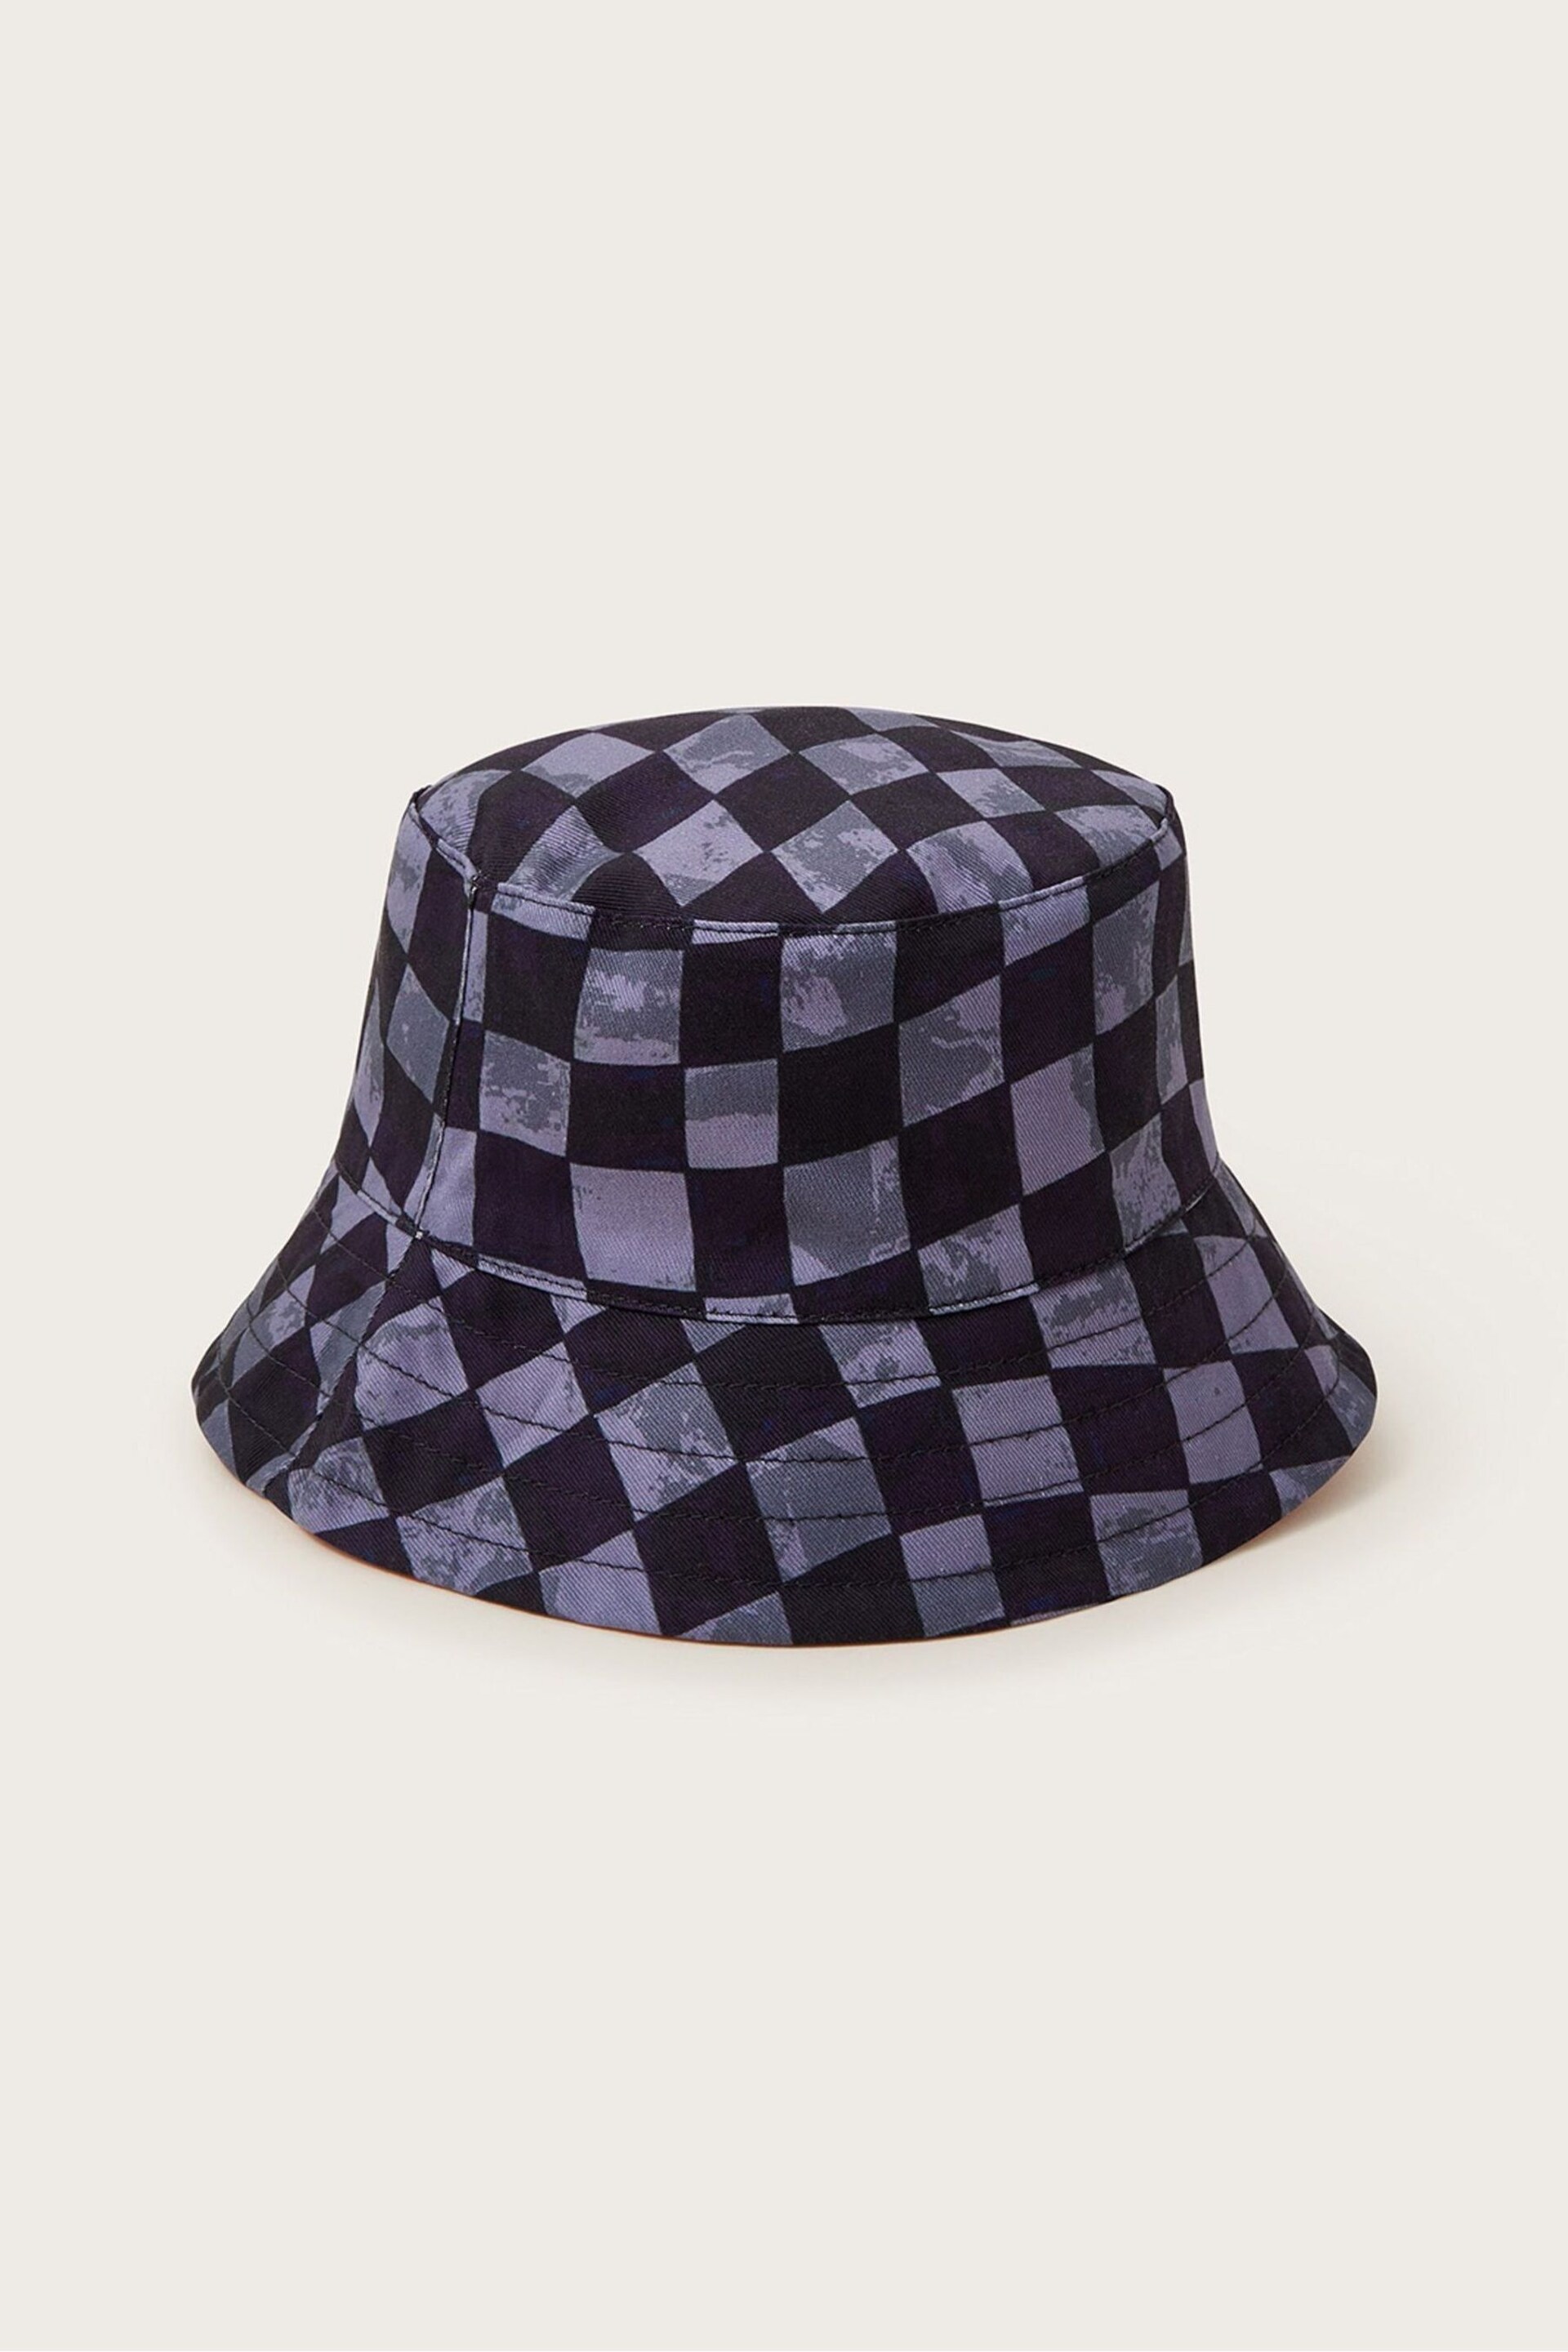 Monsoon Black Reversible Check Bucket Hat - Image 3 of 4